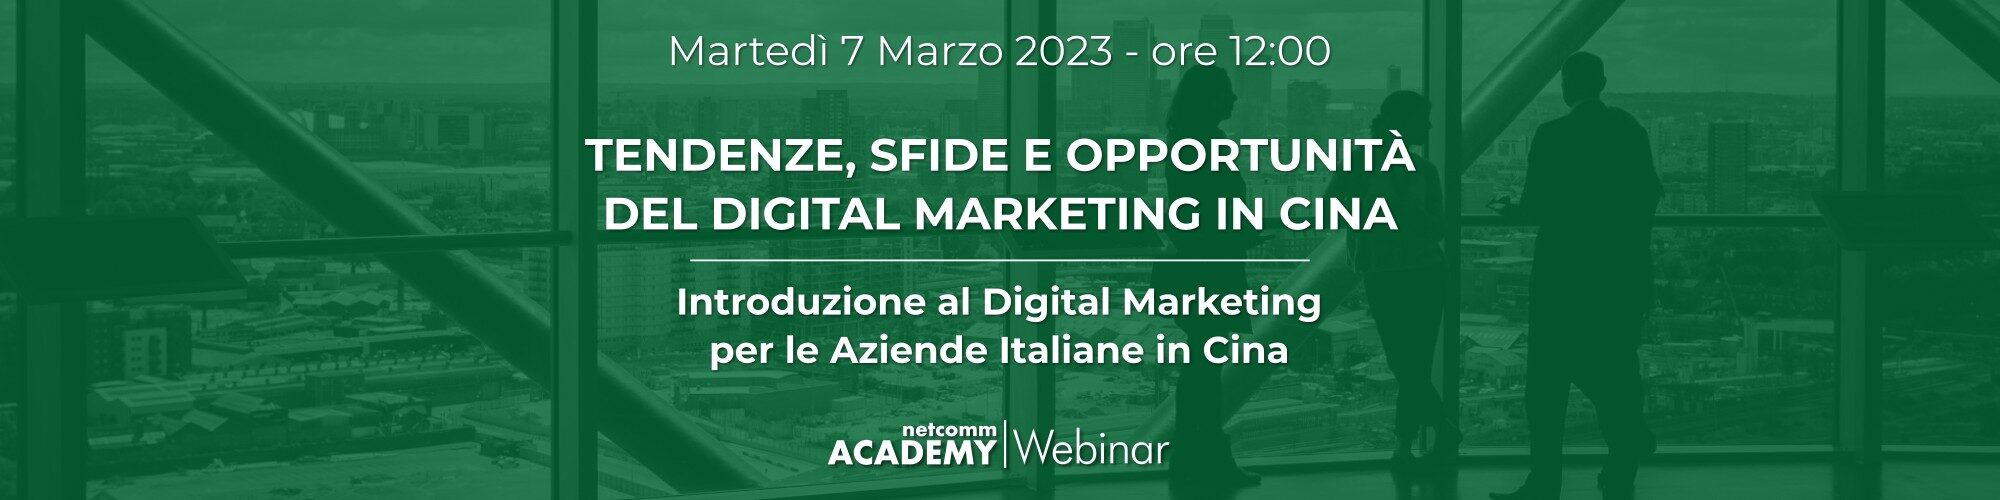 Introduzione al Digital Marketing per le Aziende Italiane in Cina